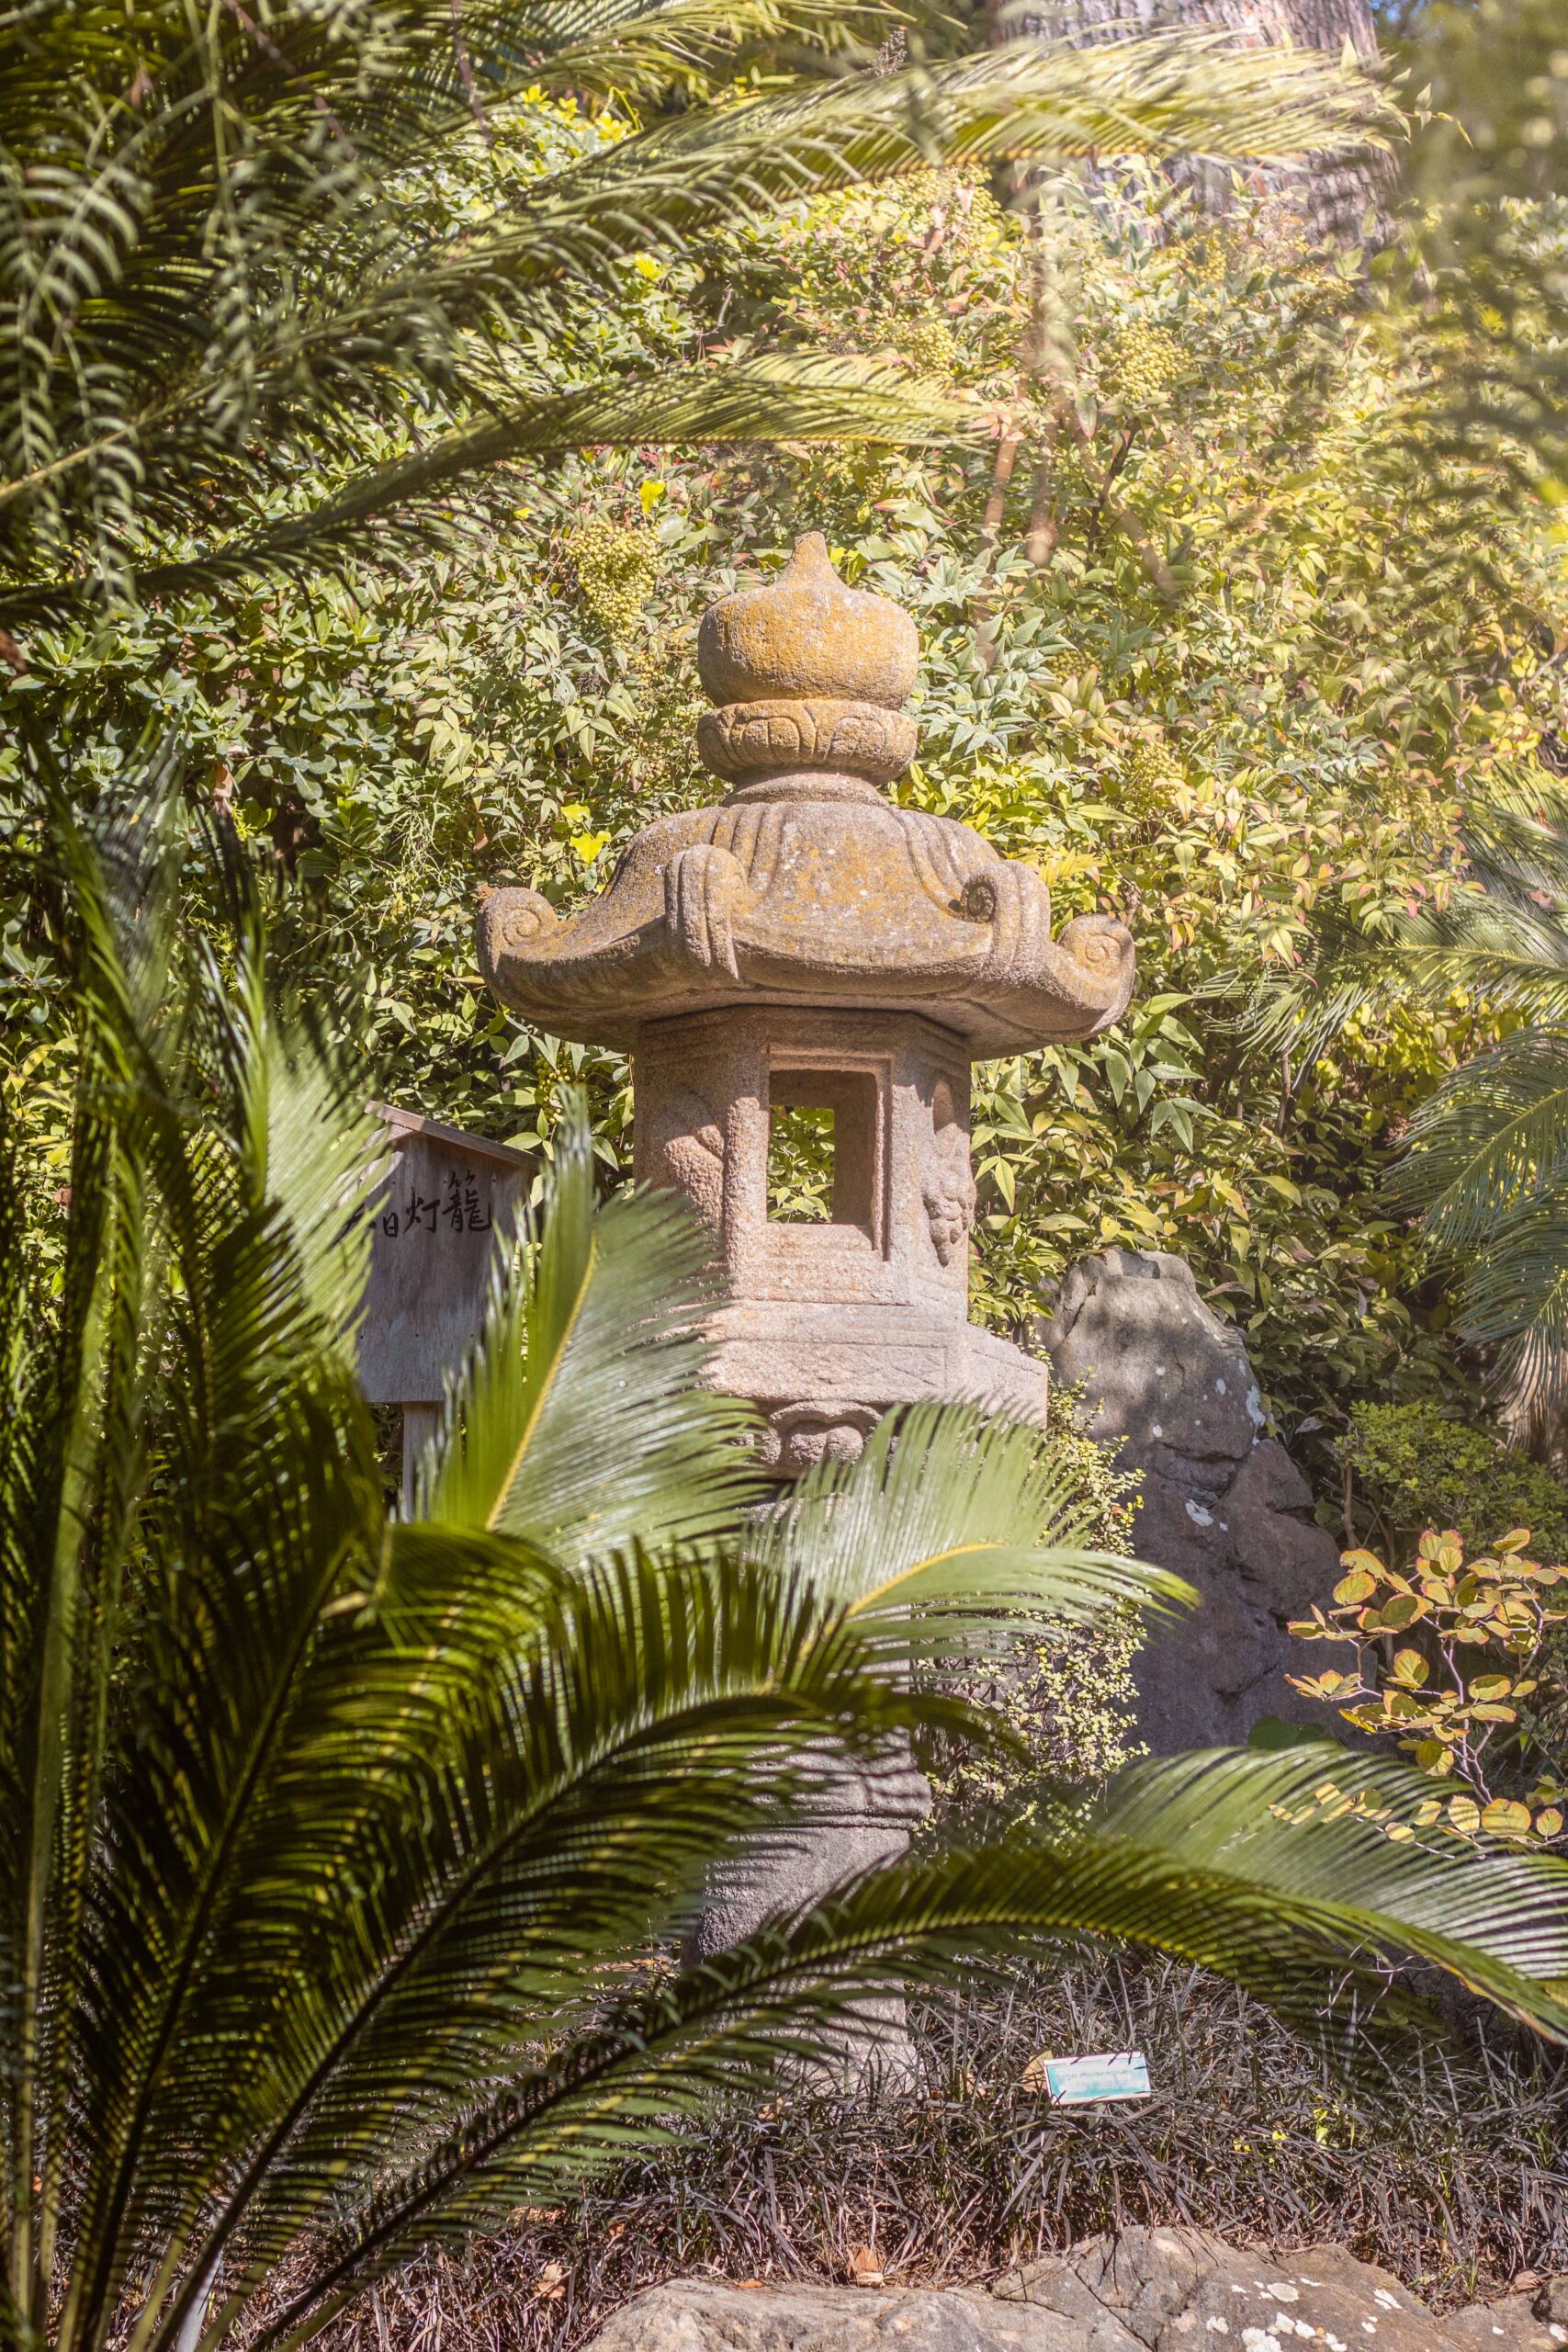 Vegetation and stone decoration in the Japanese Garden of Villa Ephrussi de Rothschild in Saint-Jean-Cap-Ferrat, France